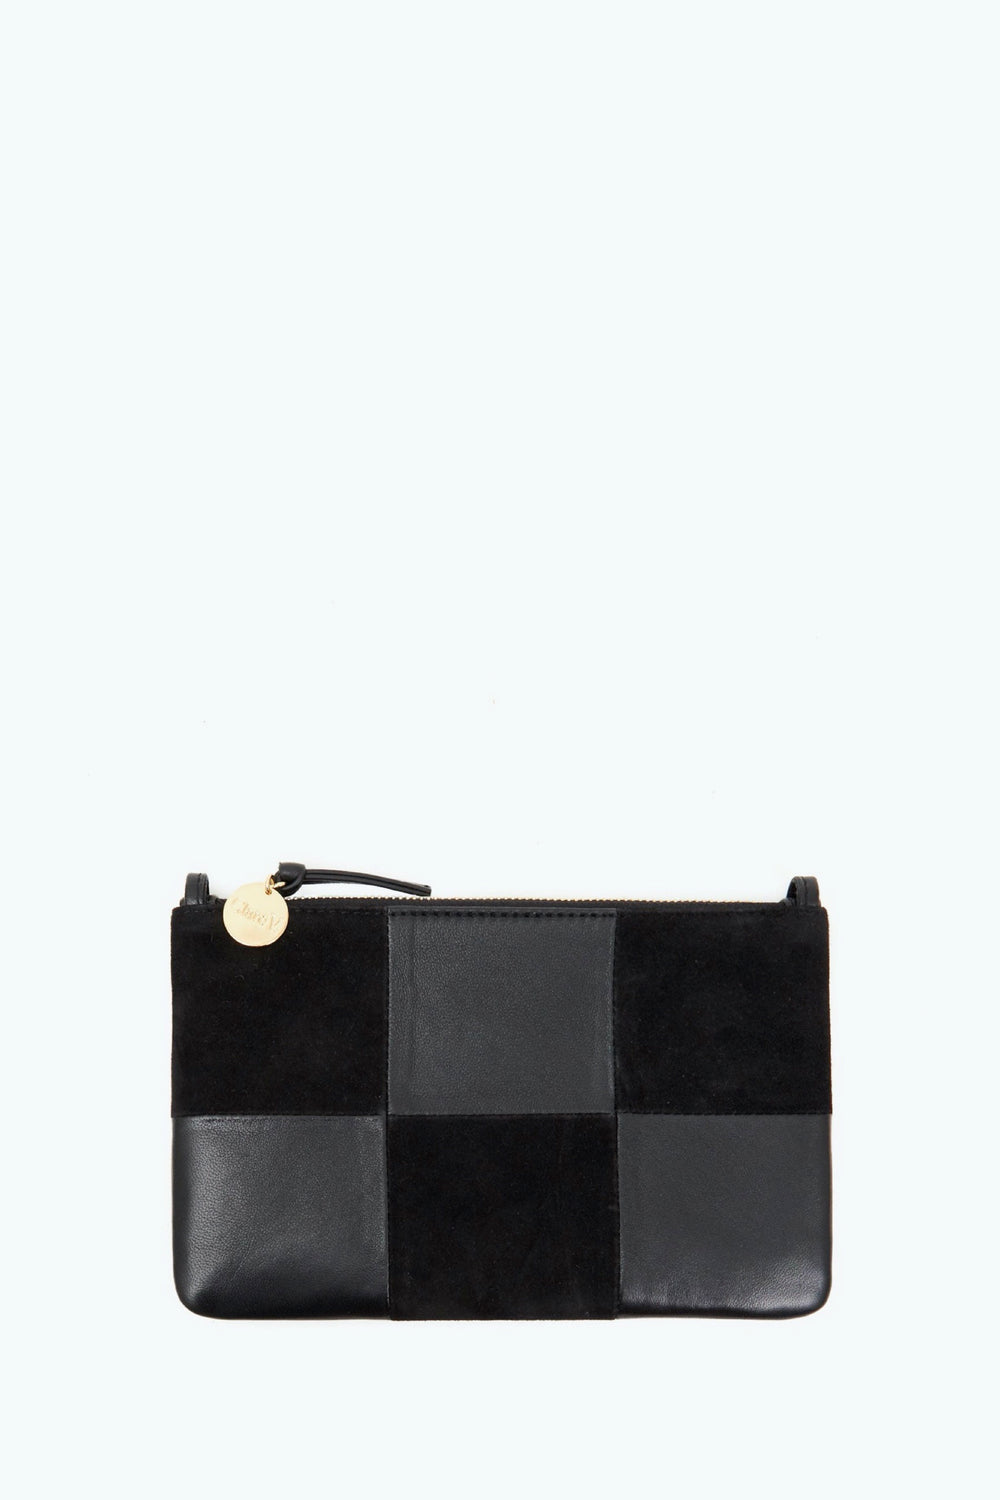 Black Suede & Nappa Patchwork Wallet Clutch